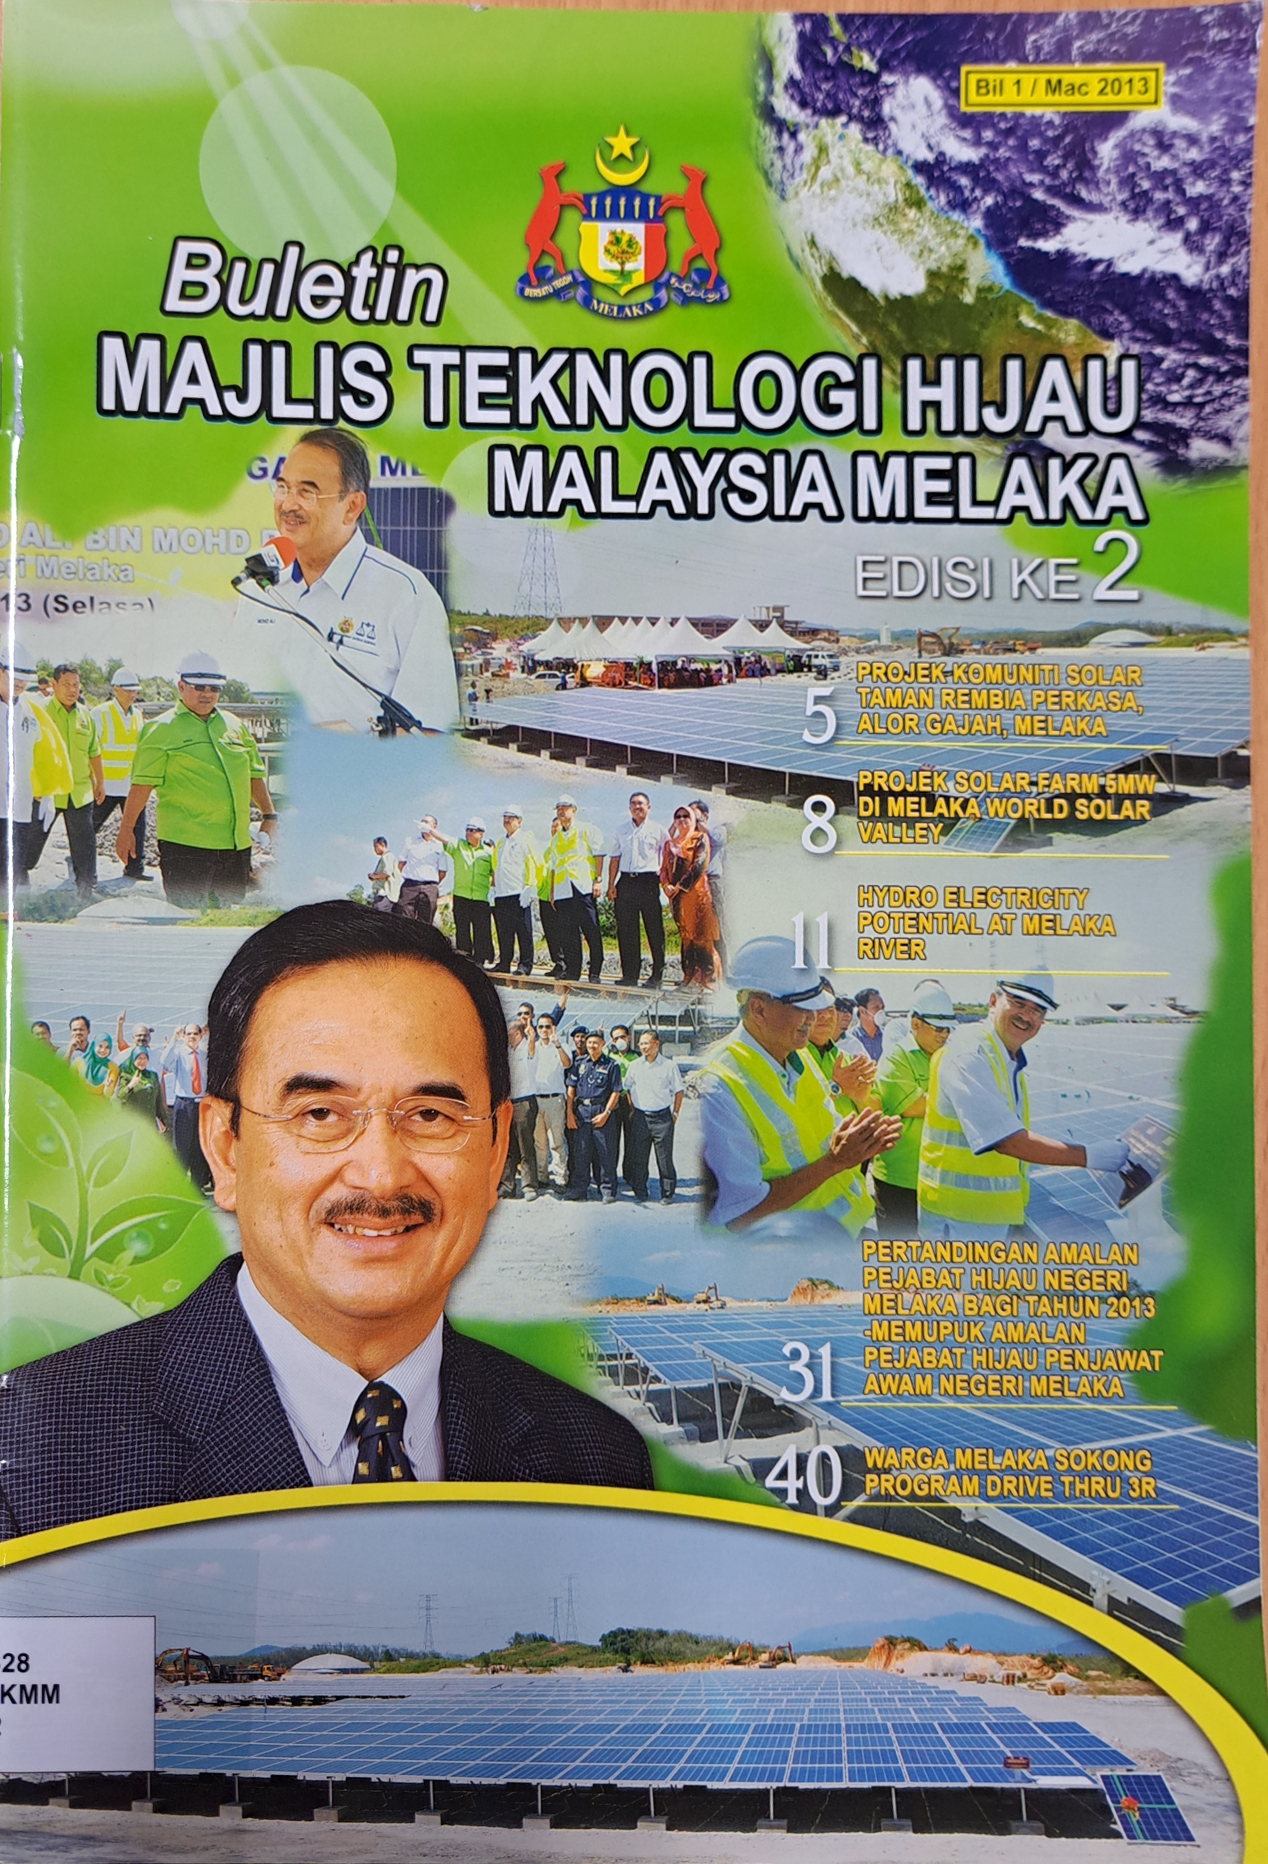 Cover image for Buletin Majlis Teknologi Hijau Malaysia Melaka Edisi Ke-2 : Bil 1 / Mac 2013 bibliographic